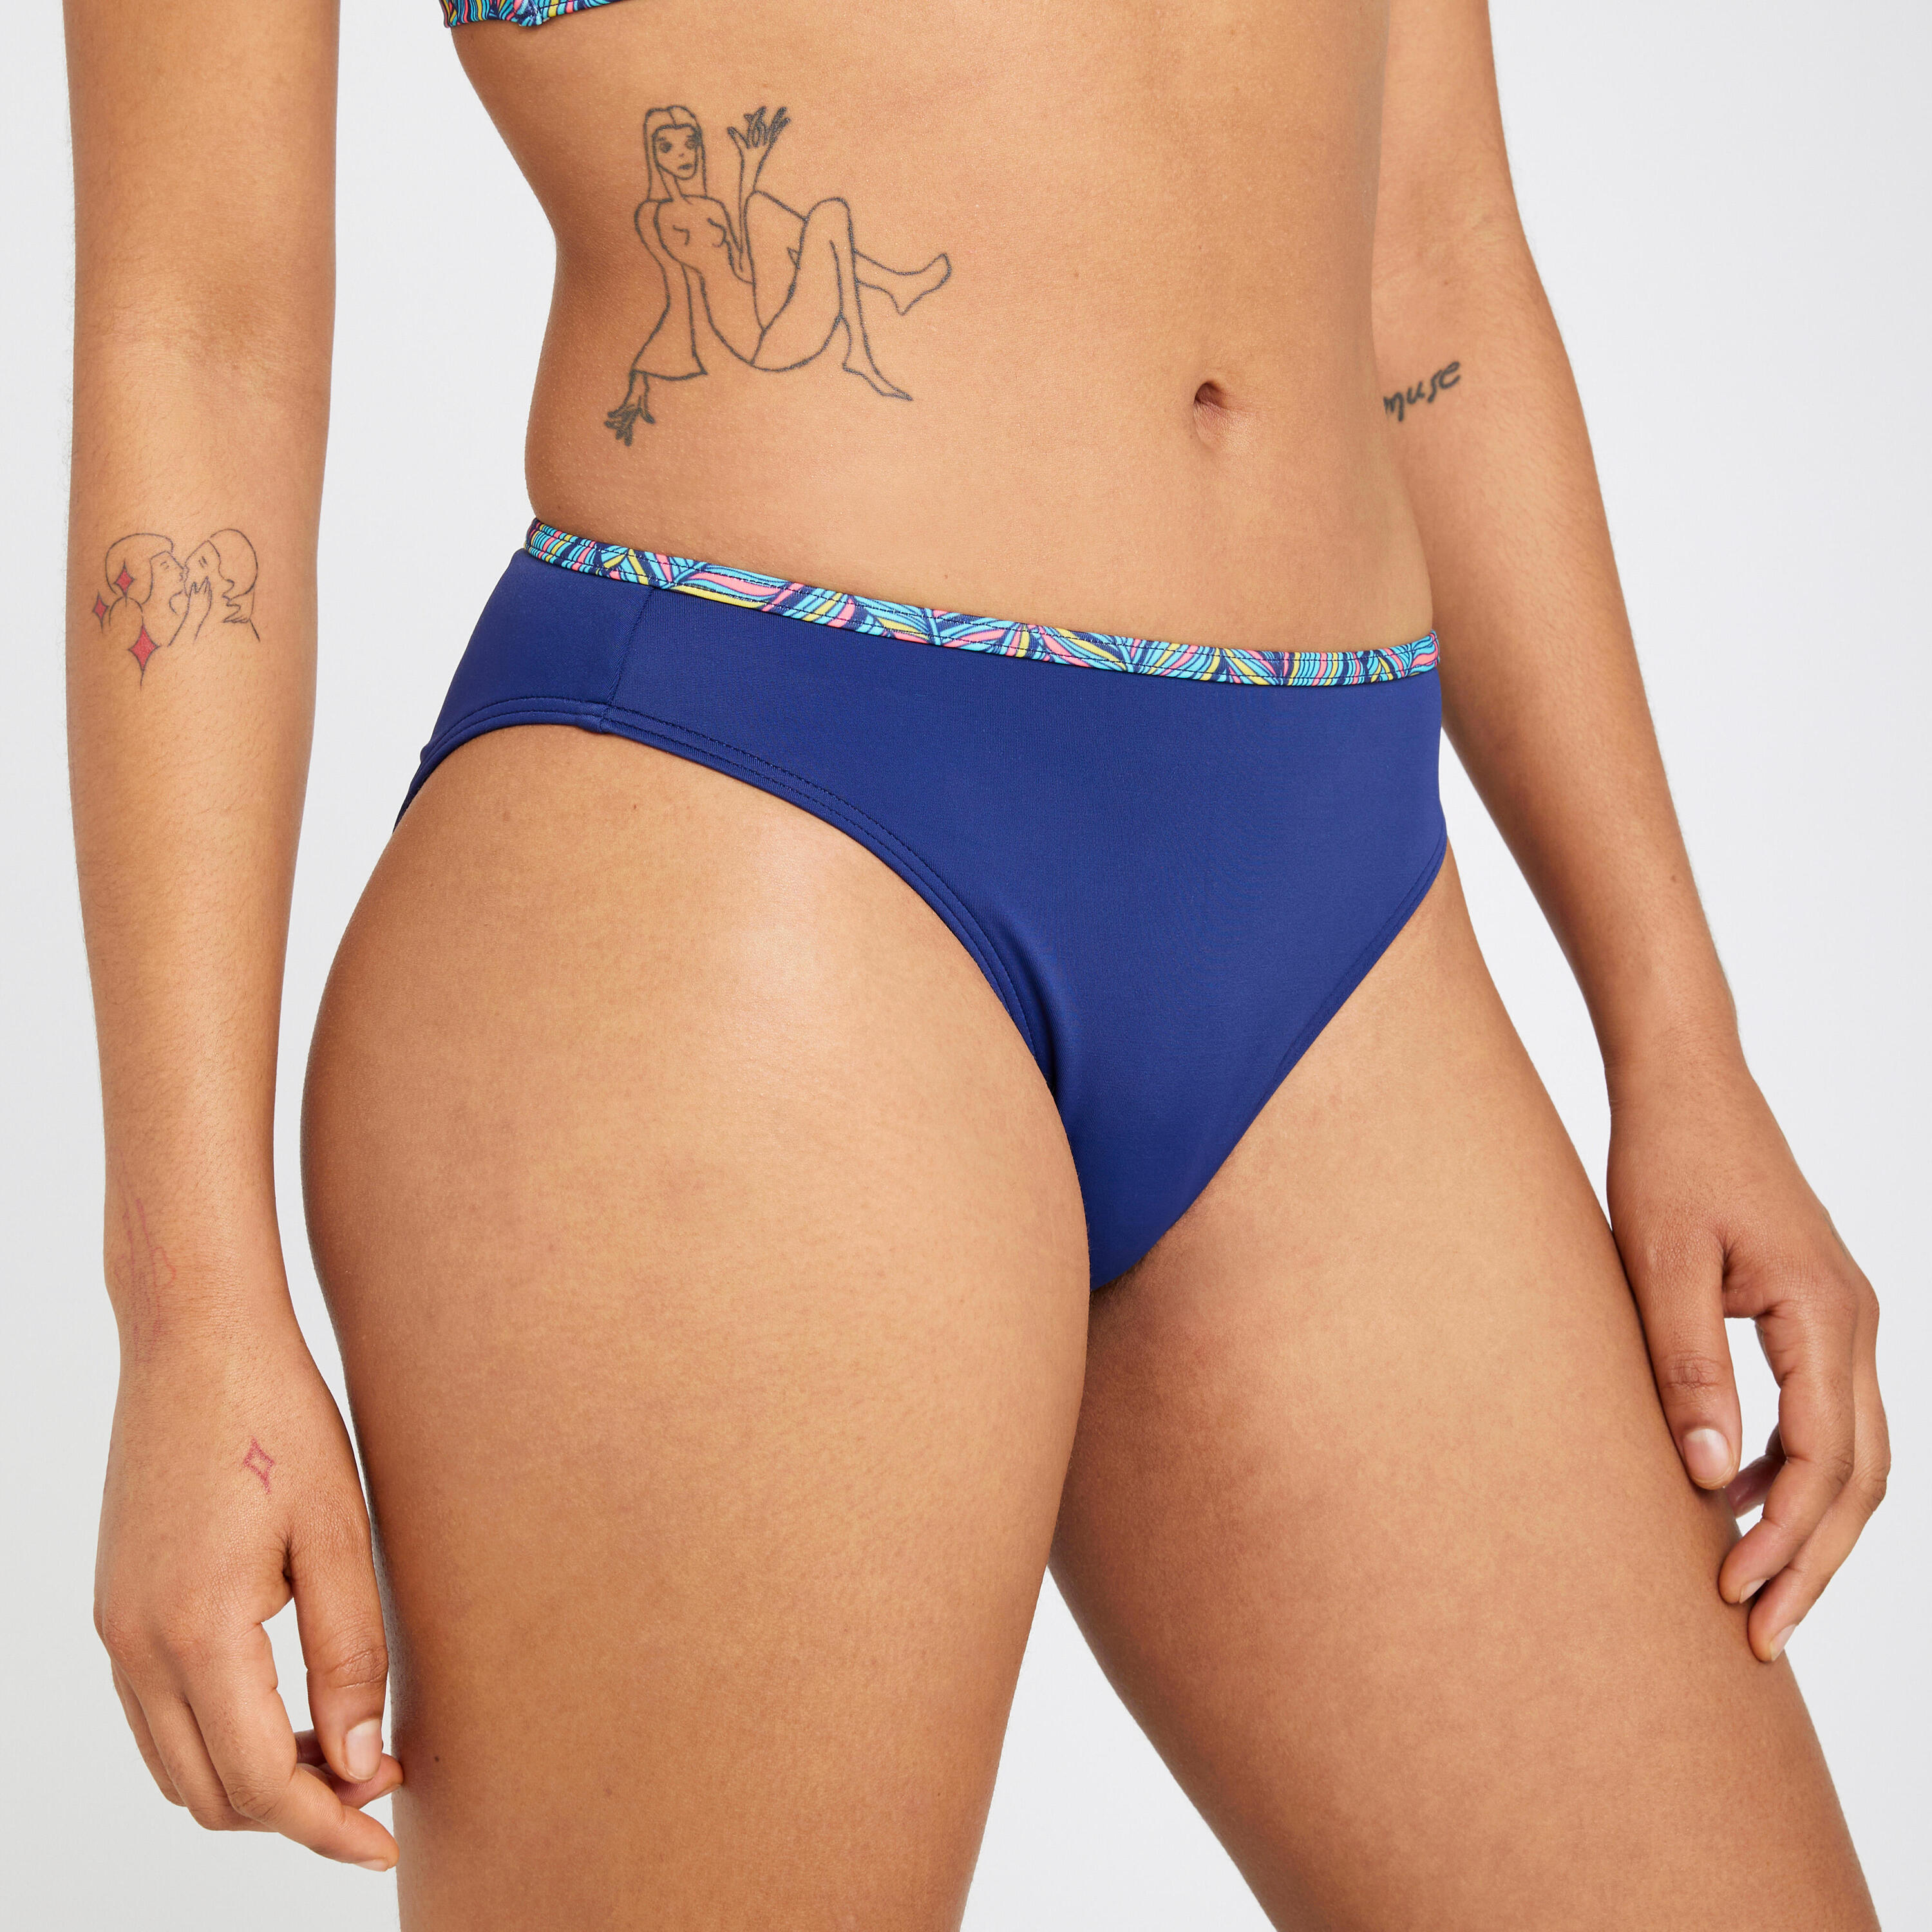 Women's briefs swimsuit bottoms - Nina foly blue 2/4